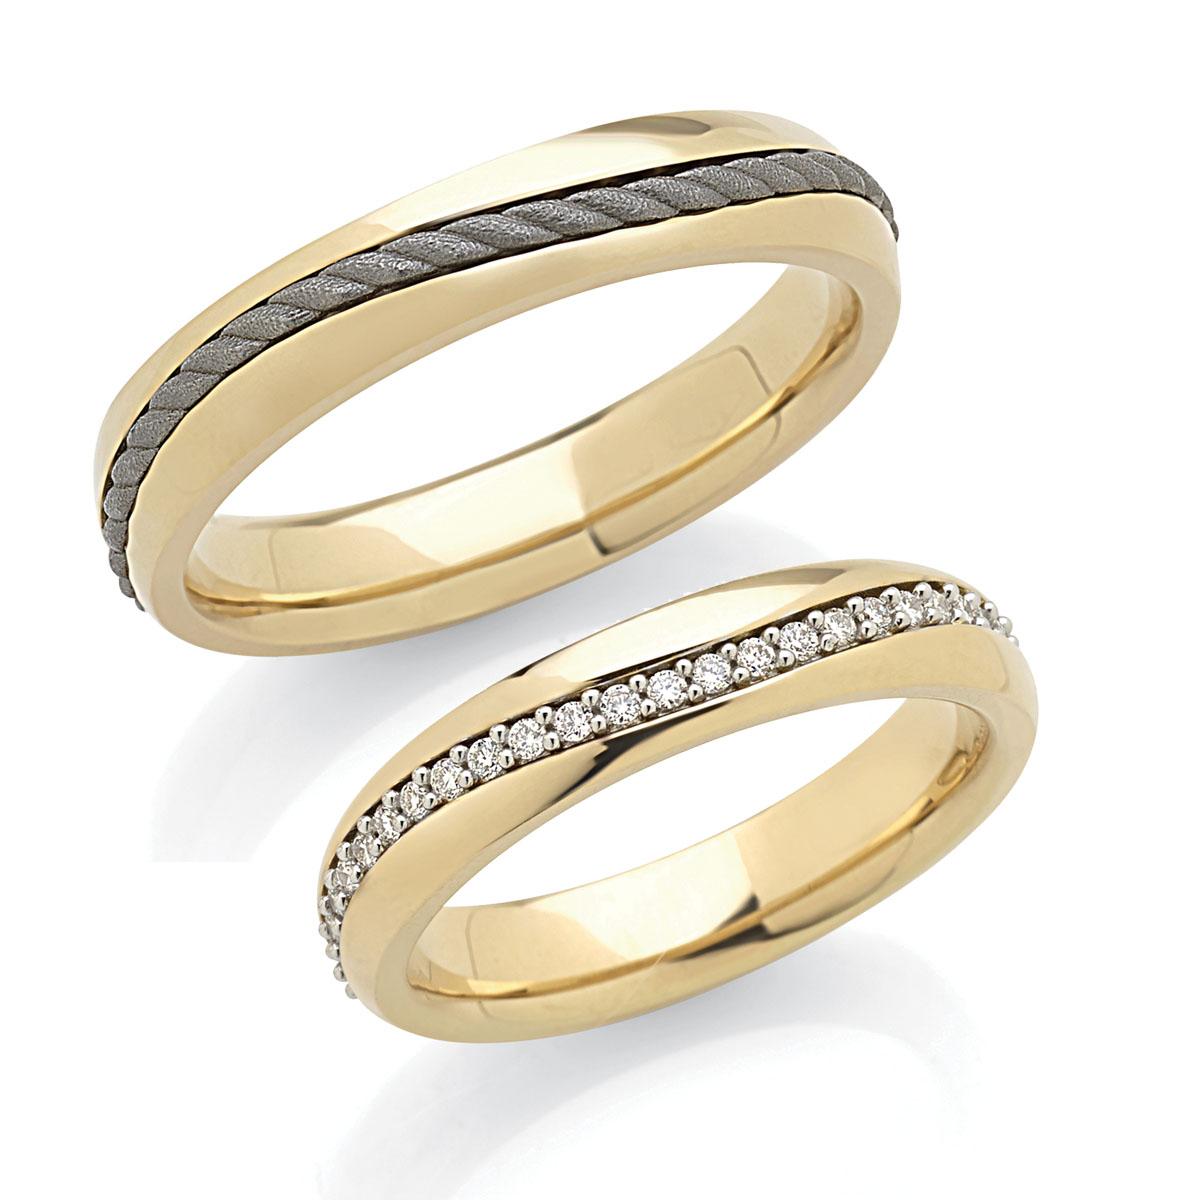 Wedding ring in 18kt titanium gold and diamond riviera - 575